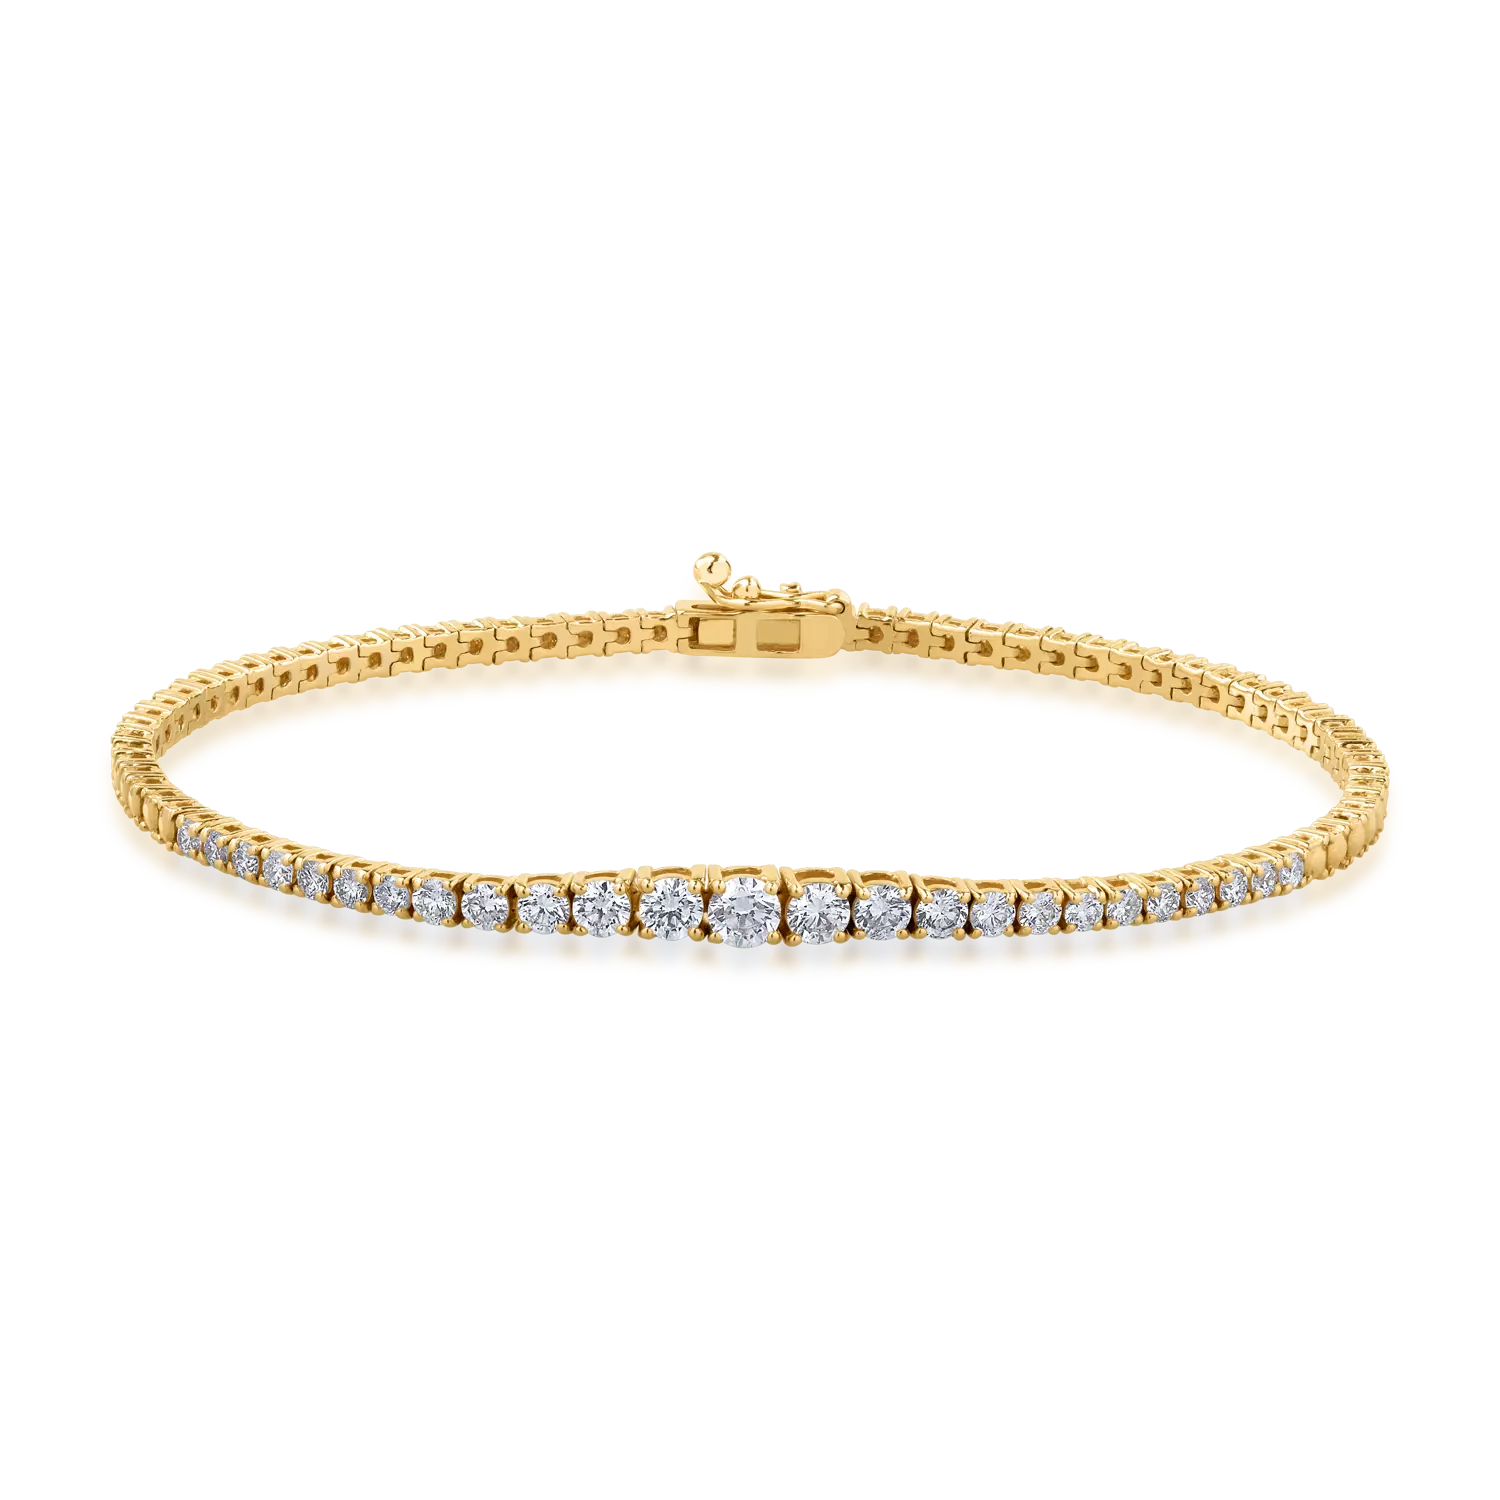 18K yellow gold tennis bracelet with 1.14ct diamonds